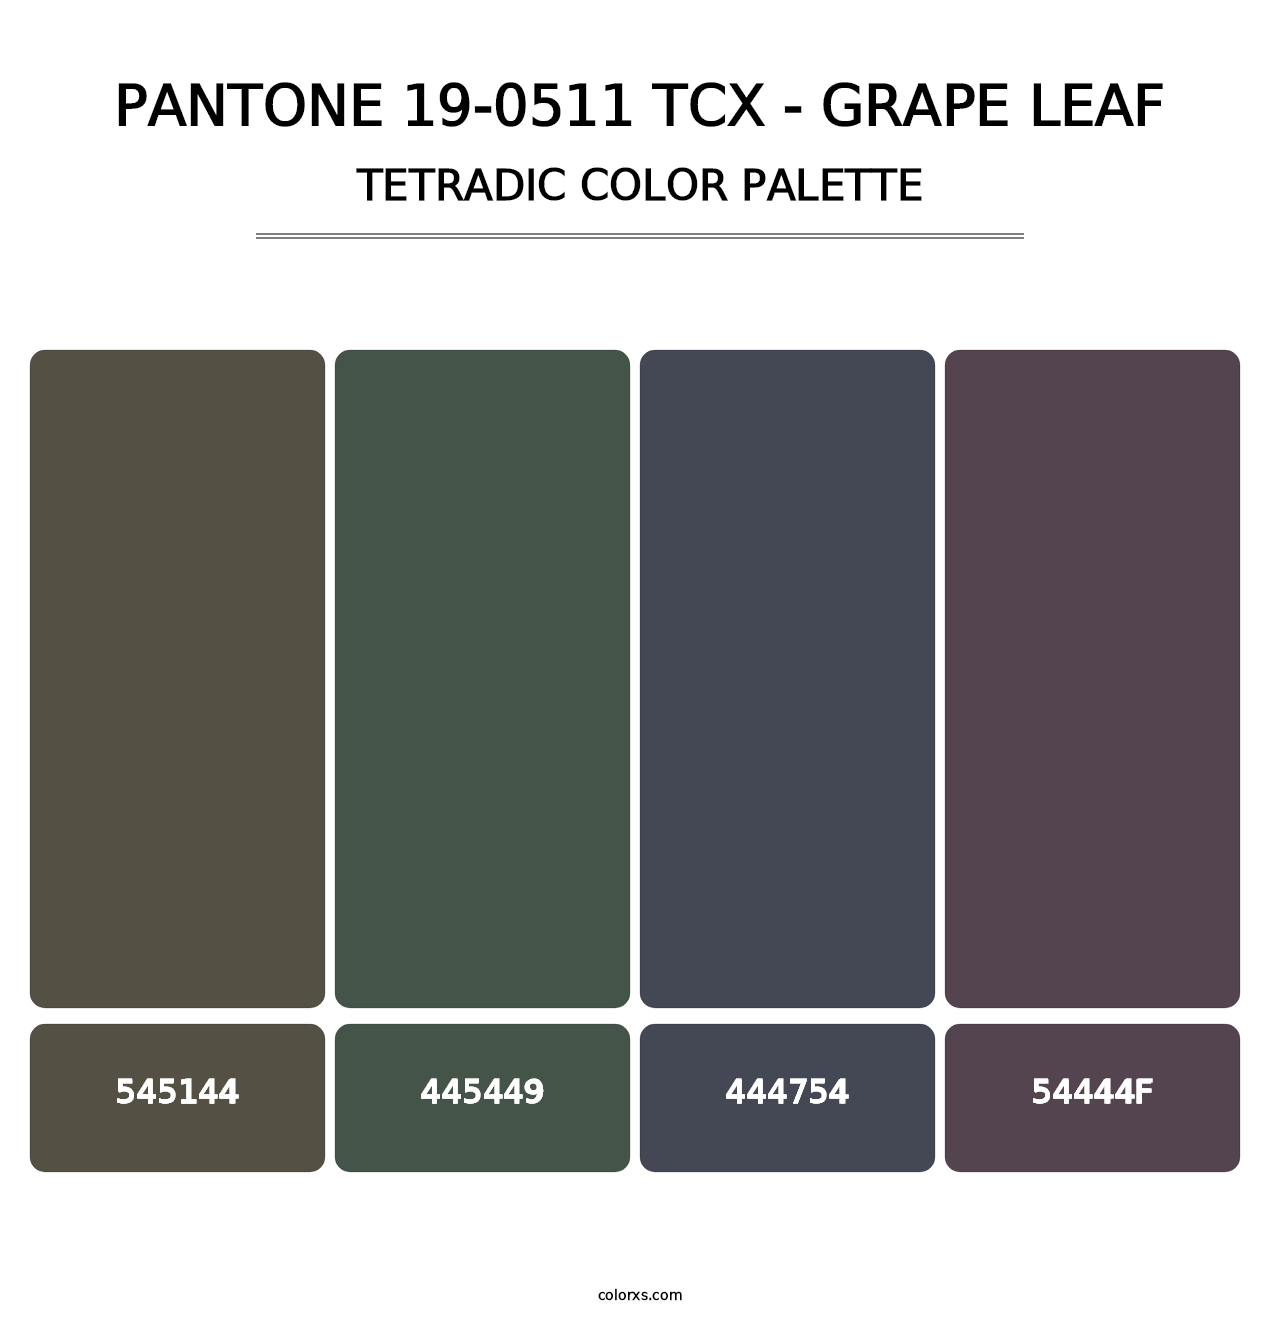 PANTONE 19-0511 TCX - Grape Leaf - Tetradic Color Palette